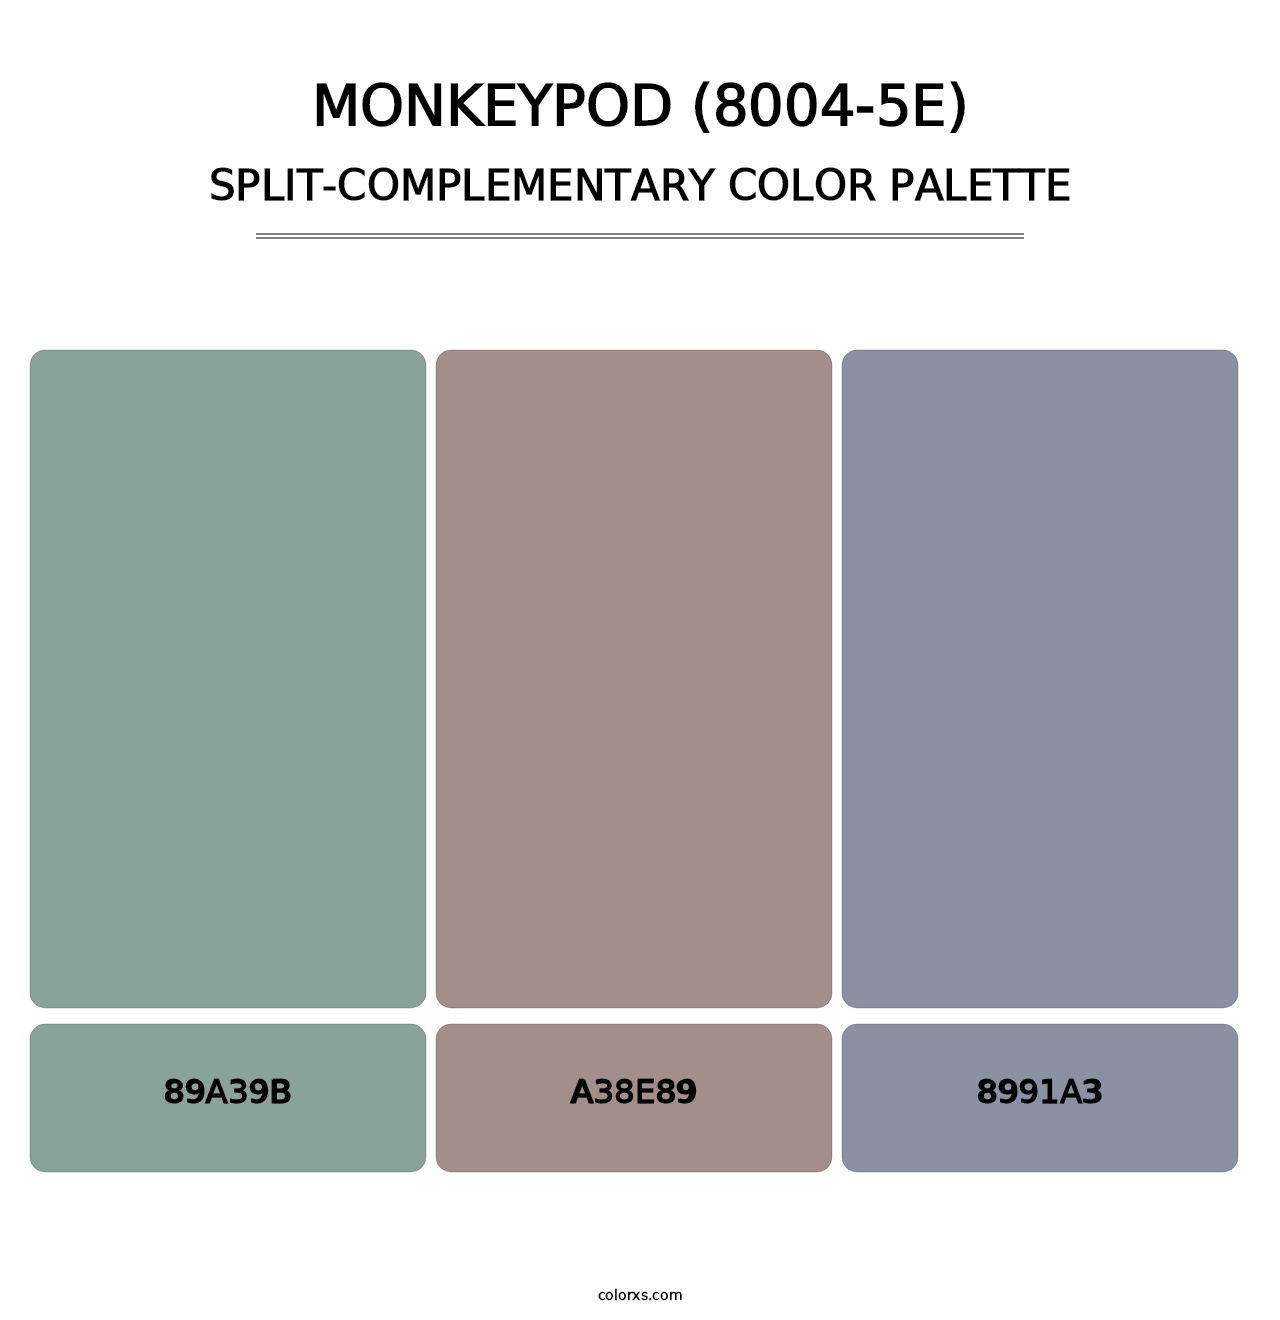 Monkeypod (8004-5E) - Split-Complementary Color Palette